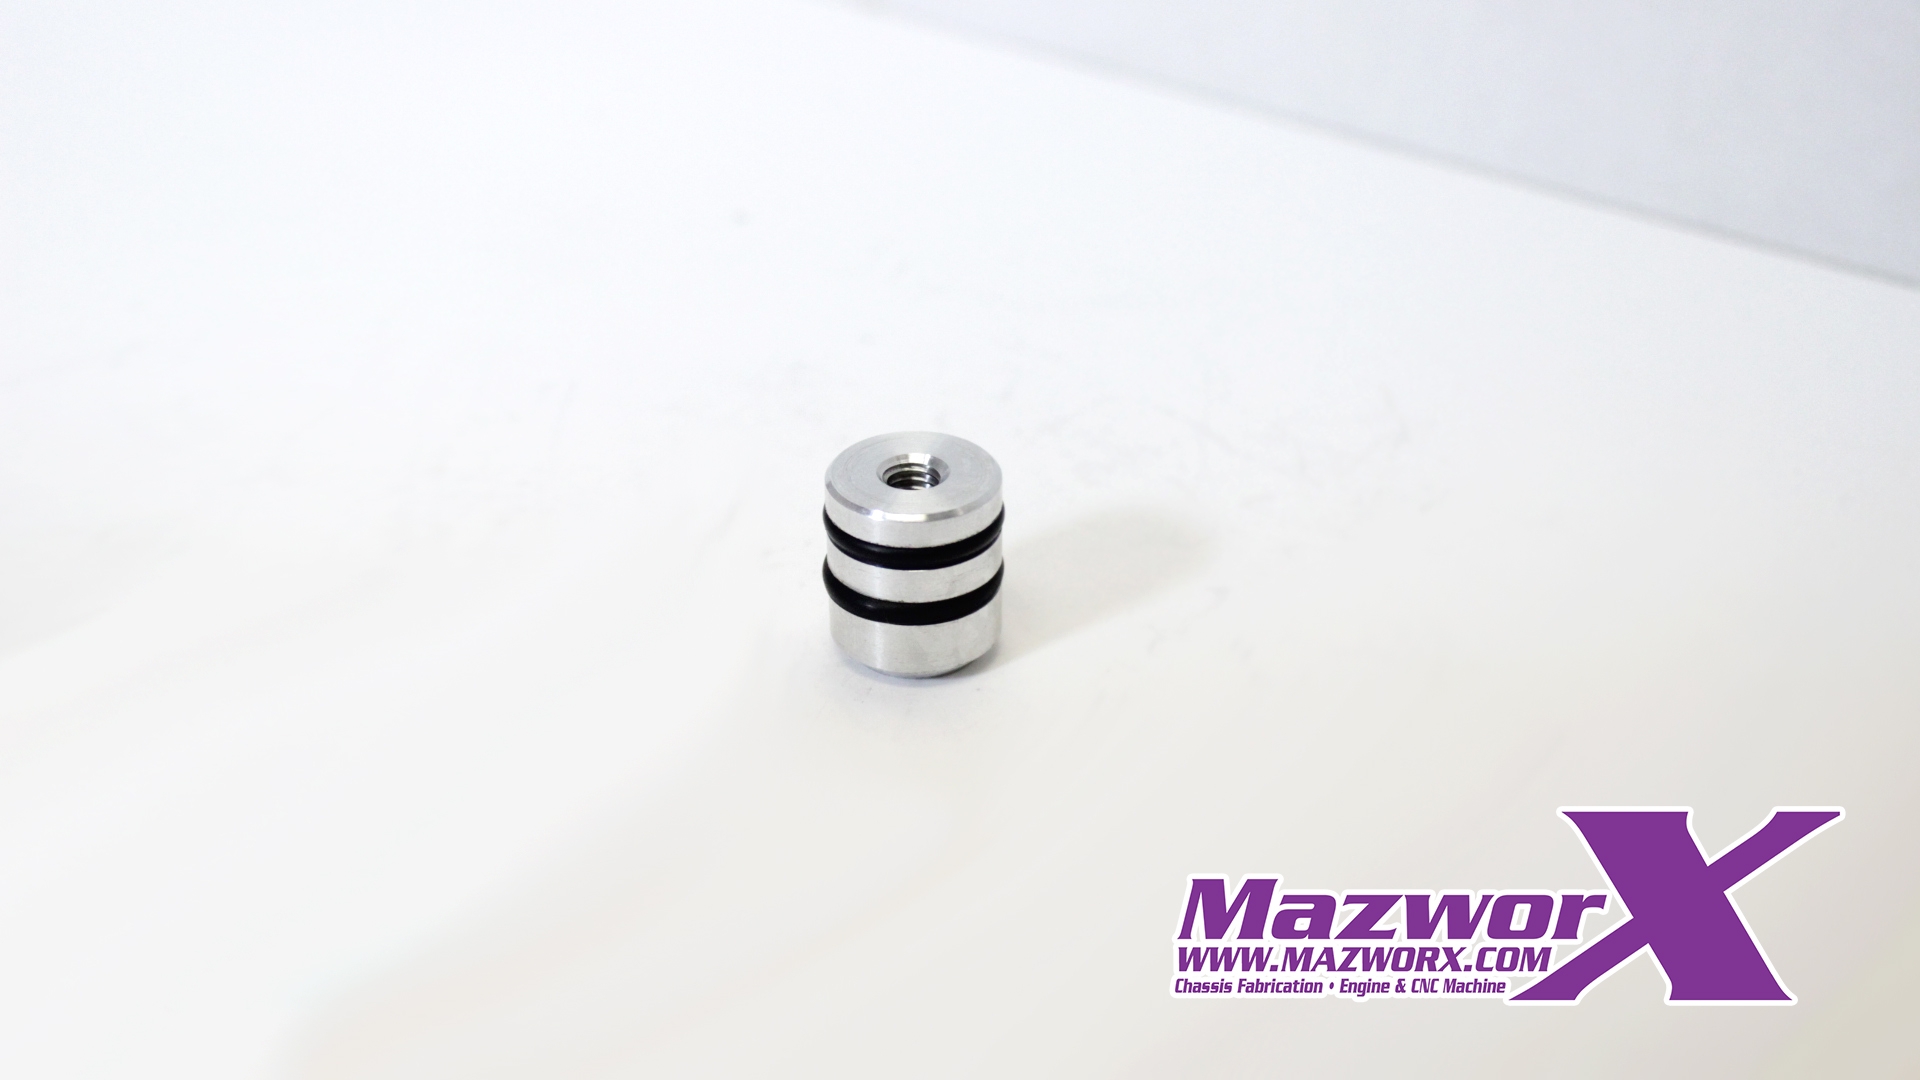 Mazworx Rear Block Oil Drain Plug RWD ONLY - Nissan SR20